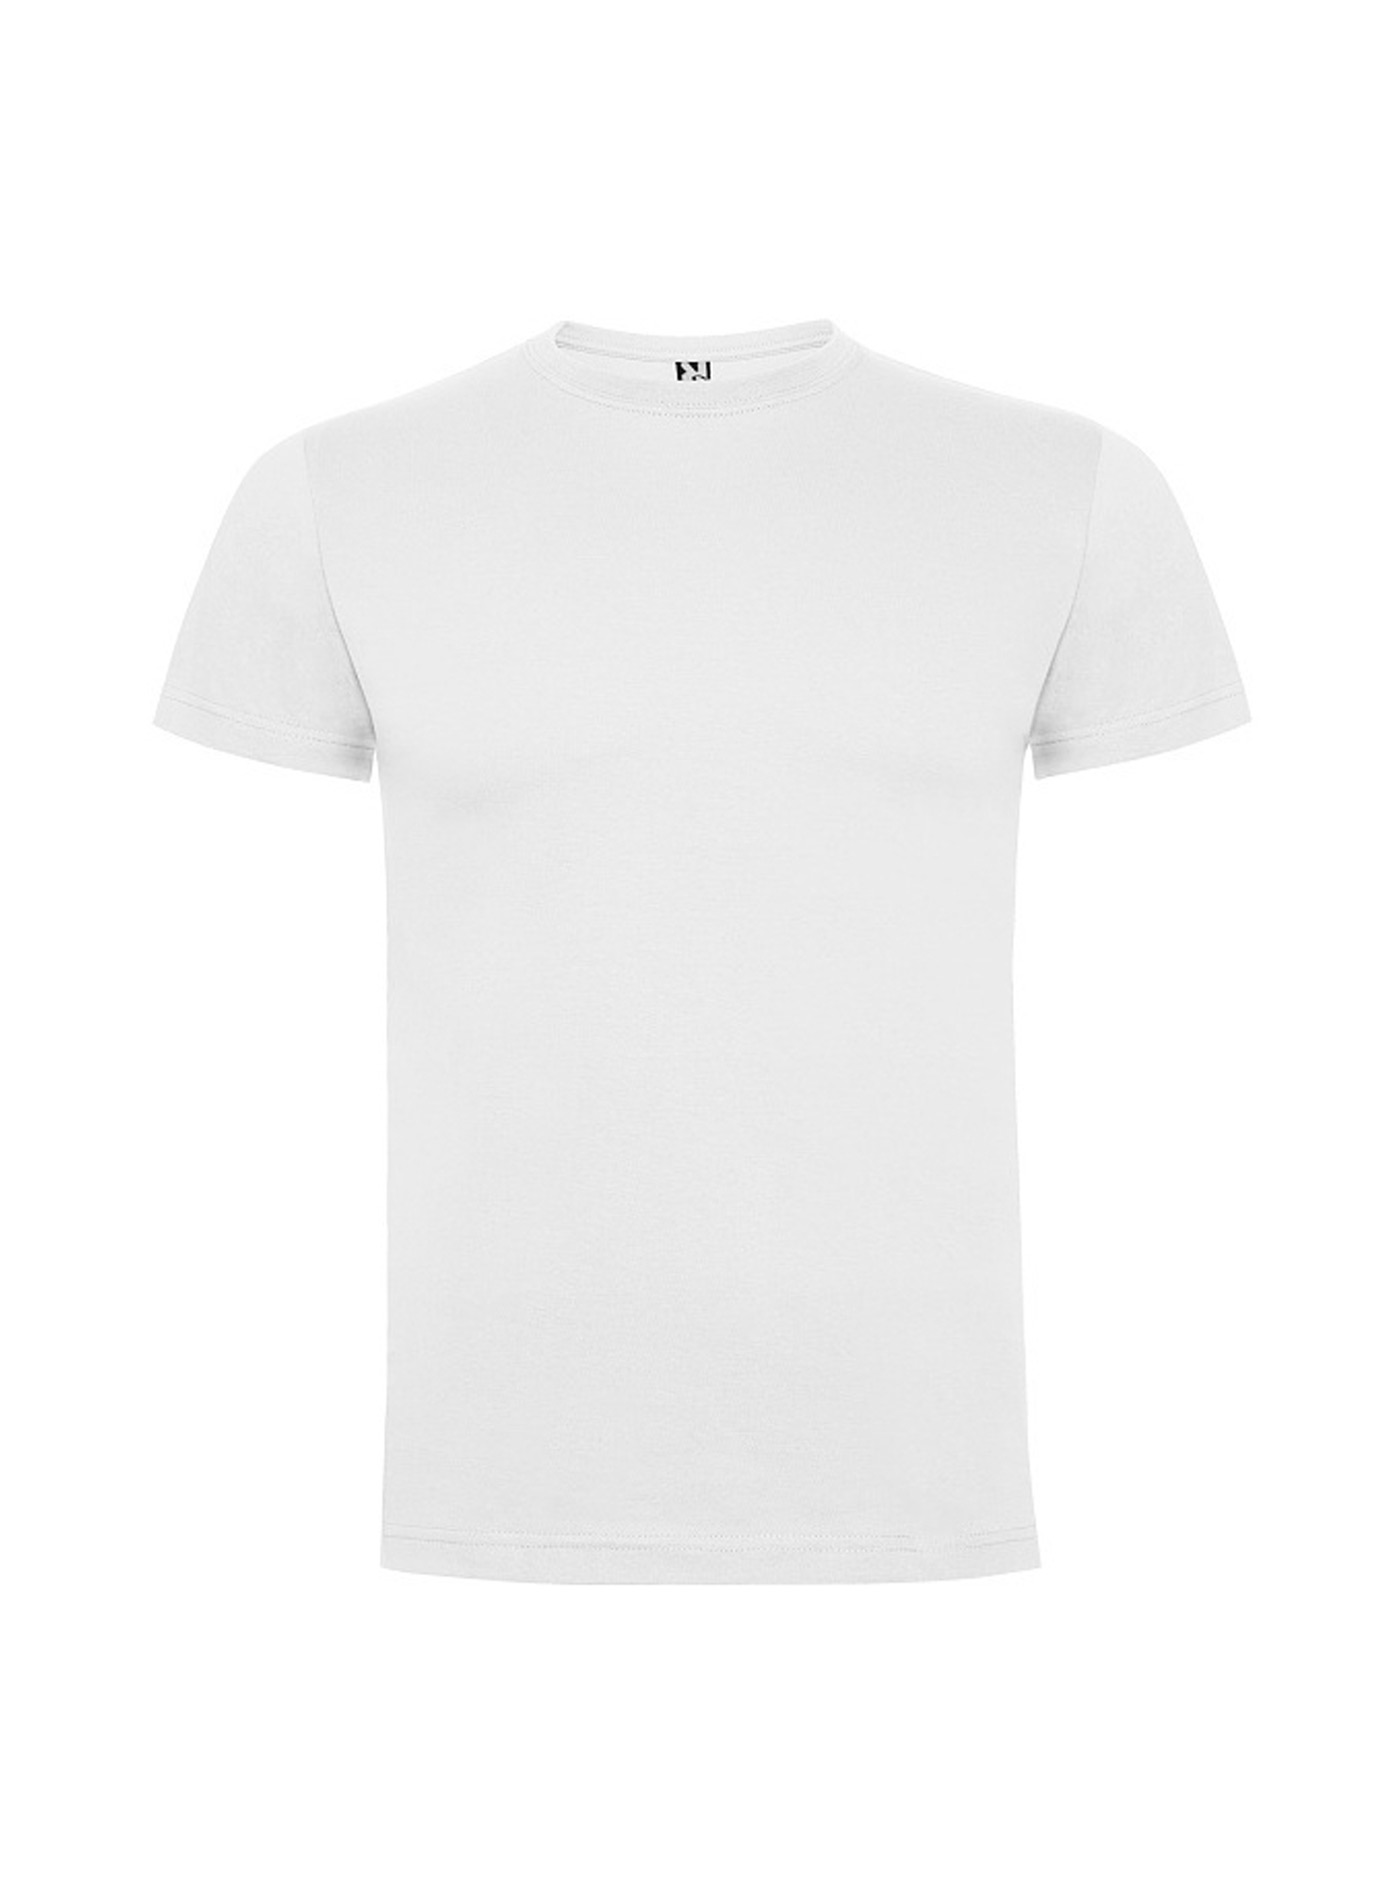 Dětské tričko Roly Dogo premium - Bílá 3-4